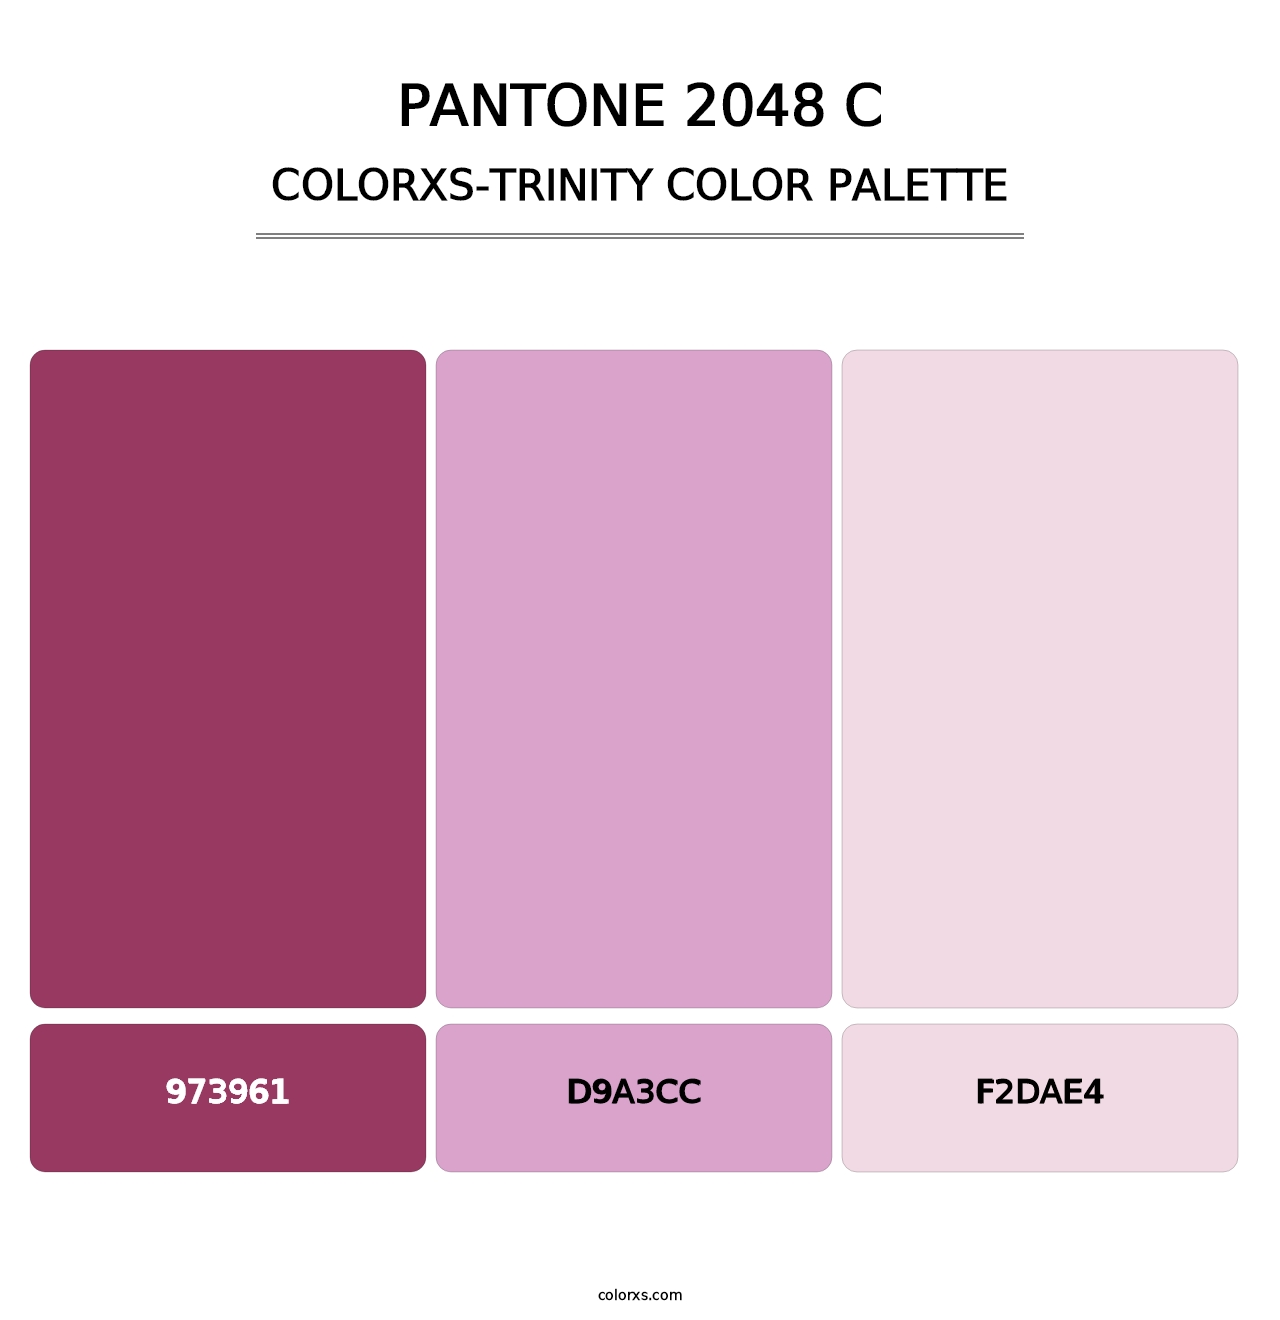 PANTONE 2048 C - Colorxs Trinity Palette